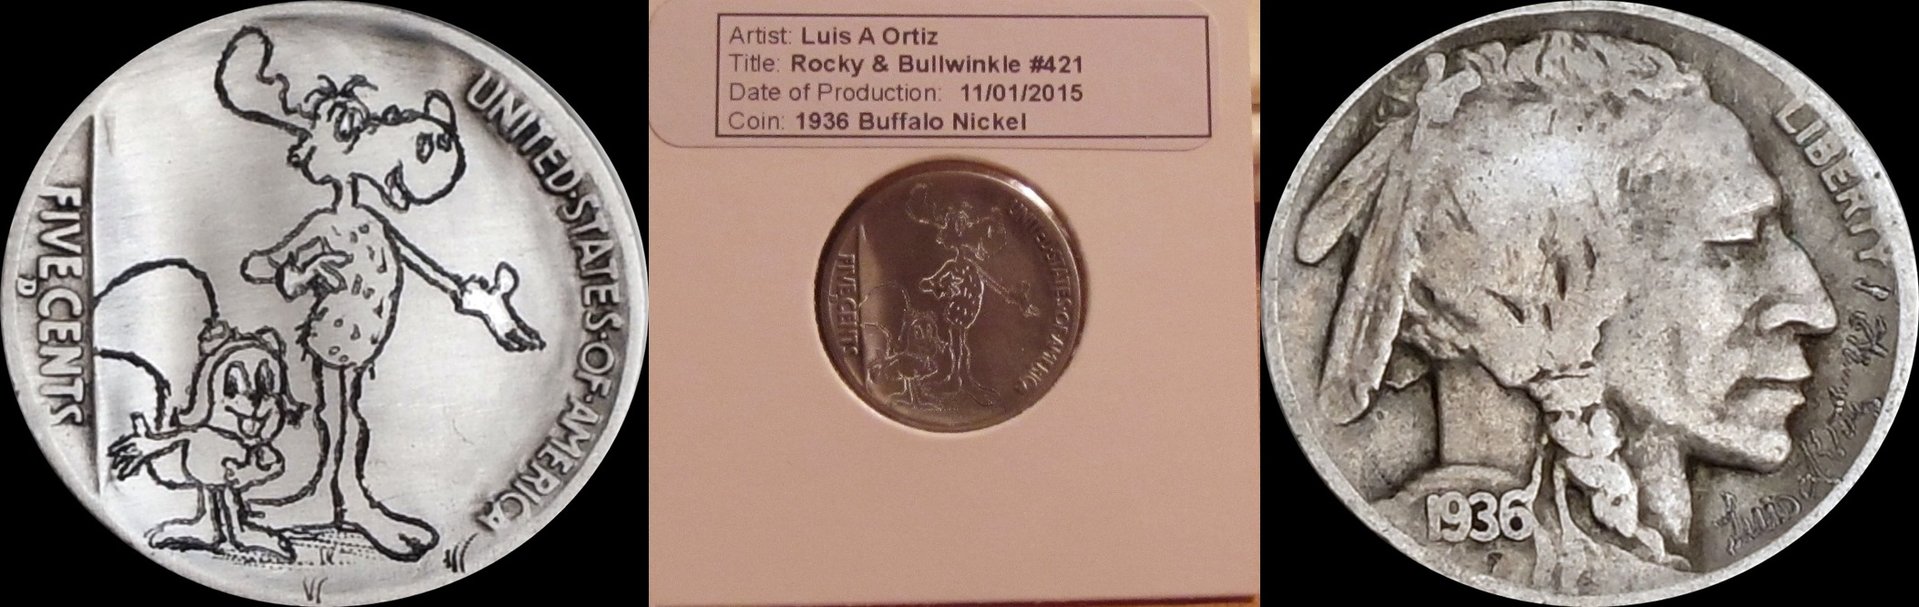 Rocky and Bullwinkle #421 Hand Engraved Hobo Nickel by Luis A Ortiz 1-horz.jpg